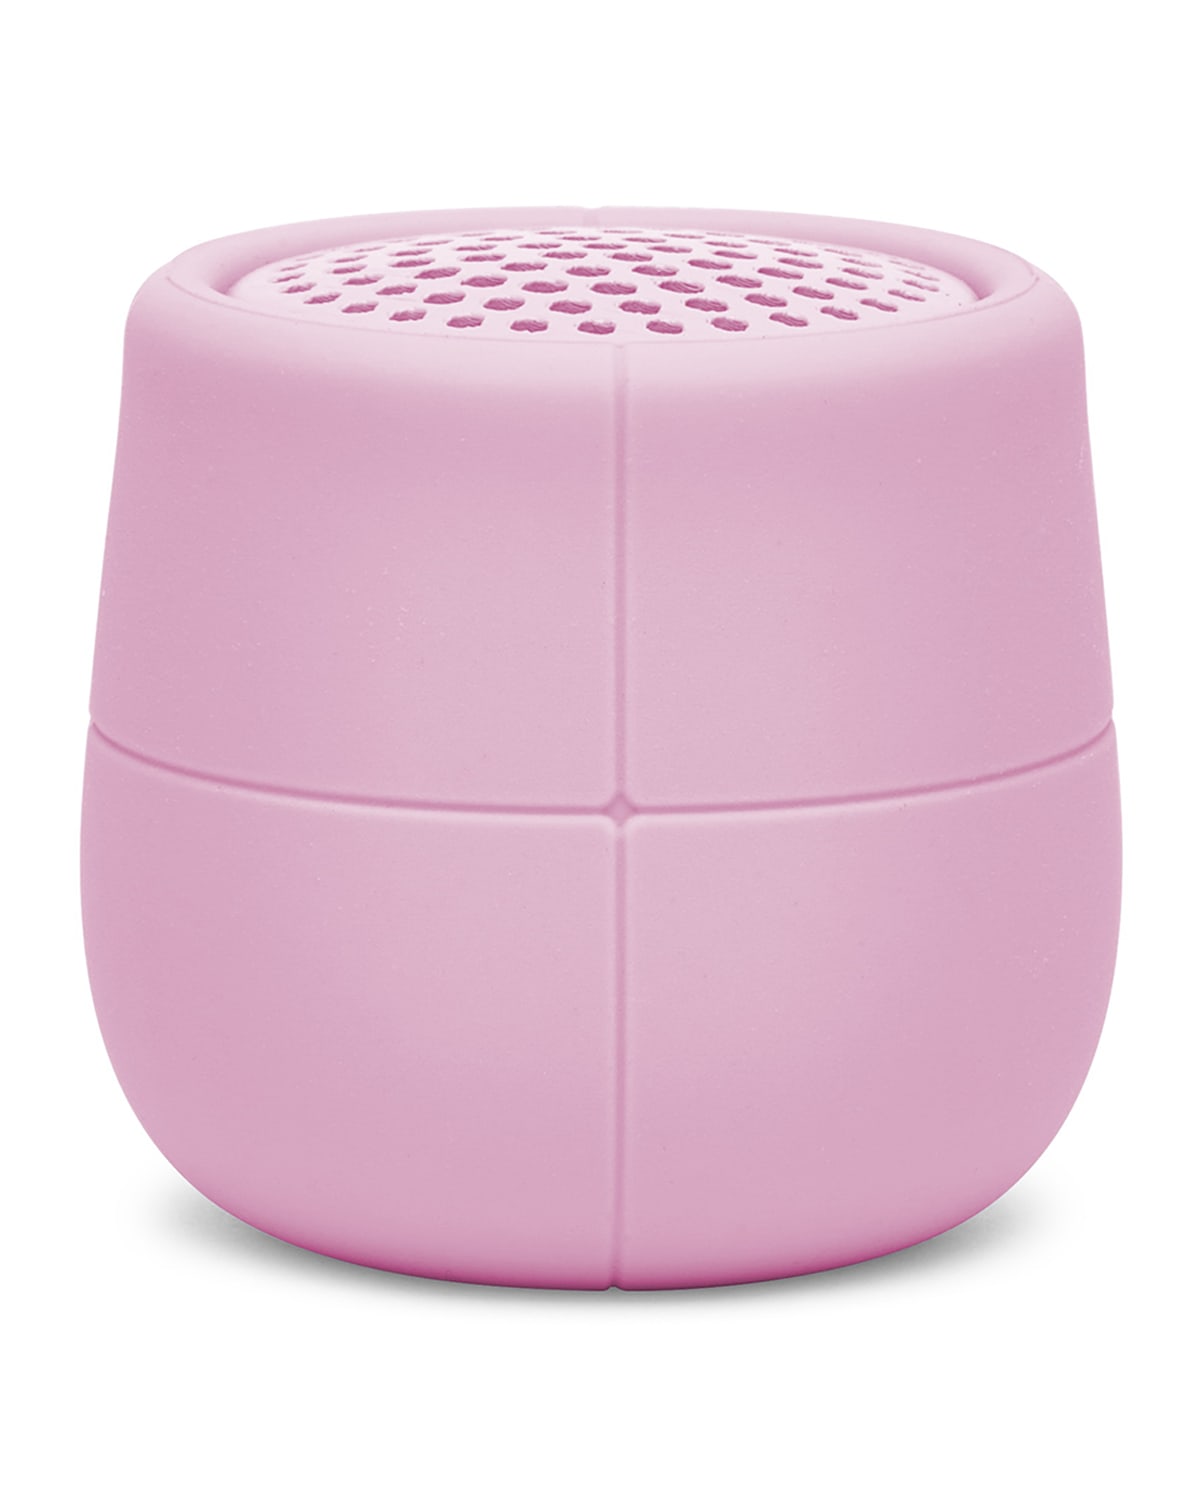 Lexon Design Mino X Water Resistant Floating Bluetooth Speaker In Pink